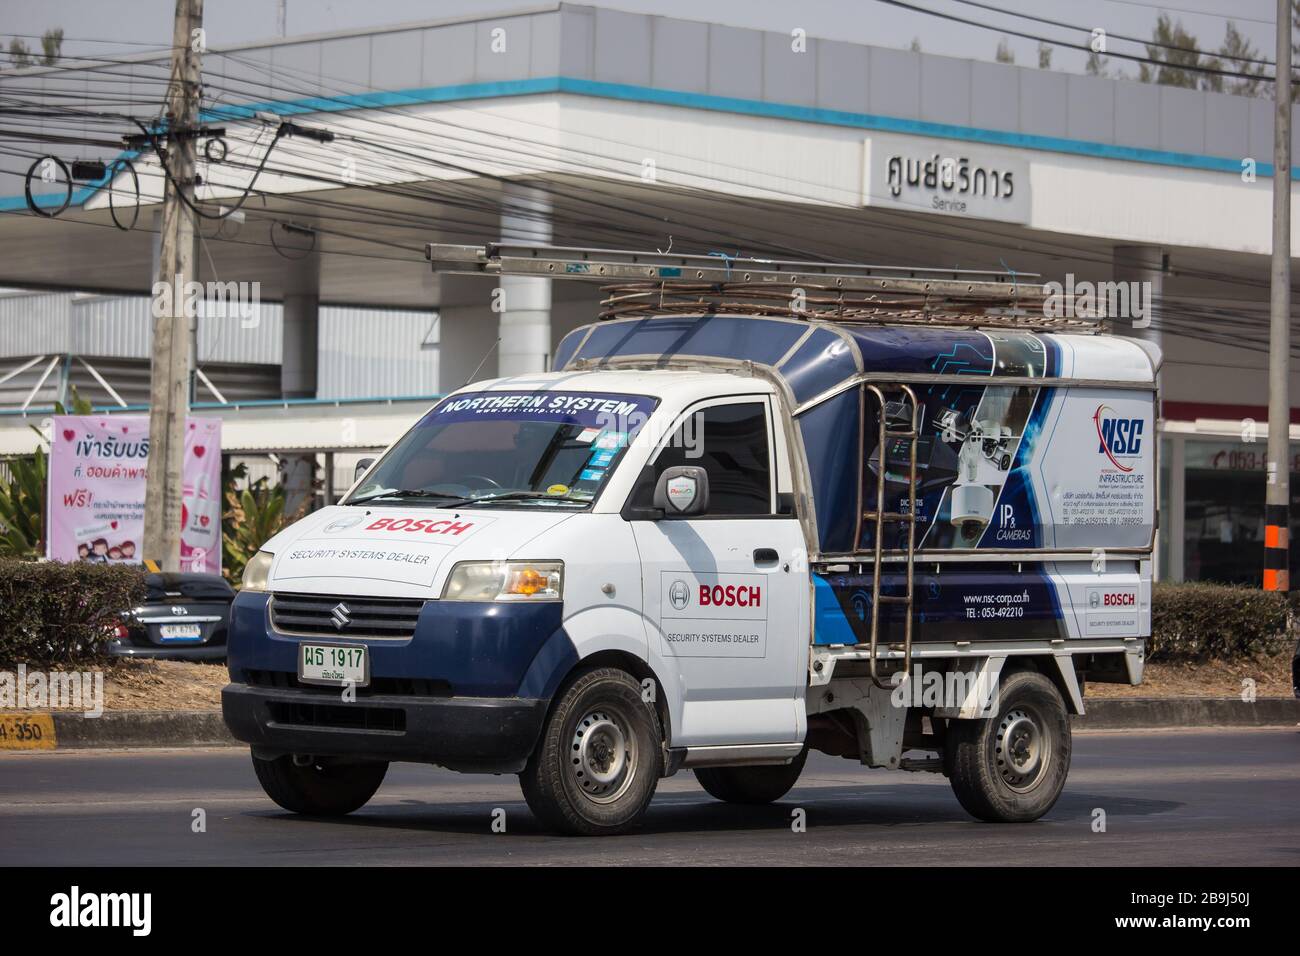 Chiangmai, Thailand - 20. Februar 2020: Suzuki Carry Pick Up Car of Northern System. Foto auf der Straße Nr. 121 ca. 8 km von der Innenstadt von Chiangmai thailand entfernt. Stockfoto